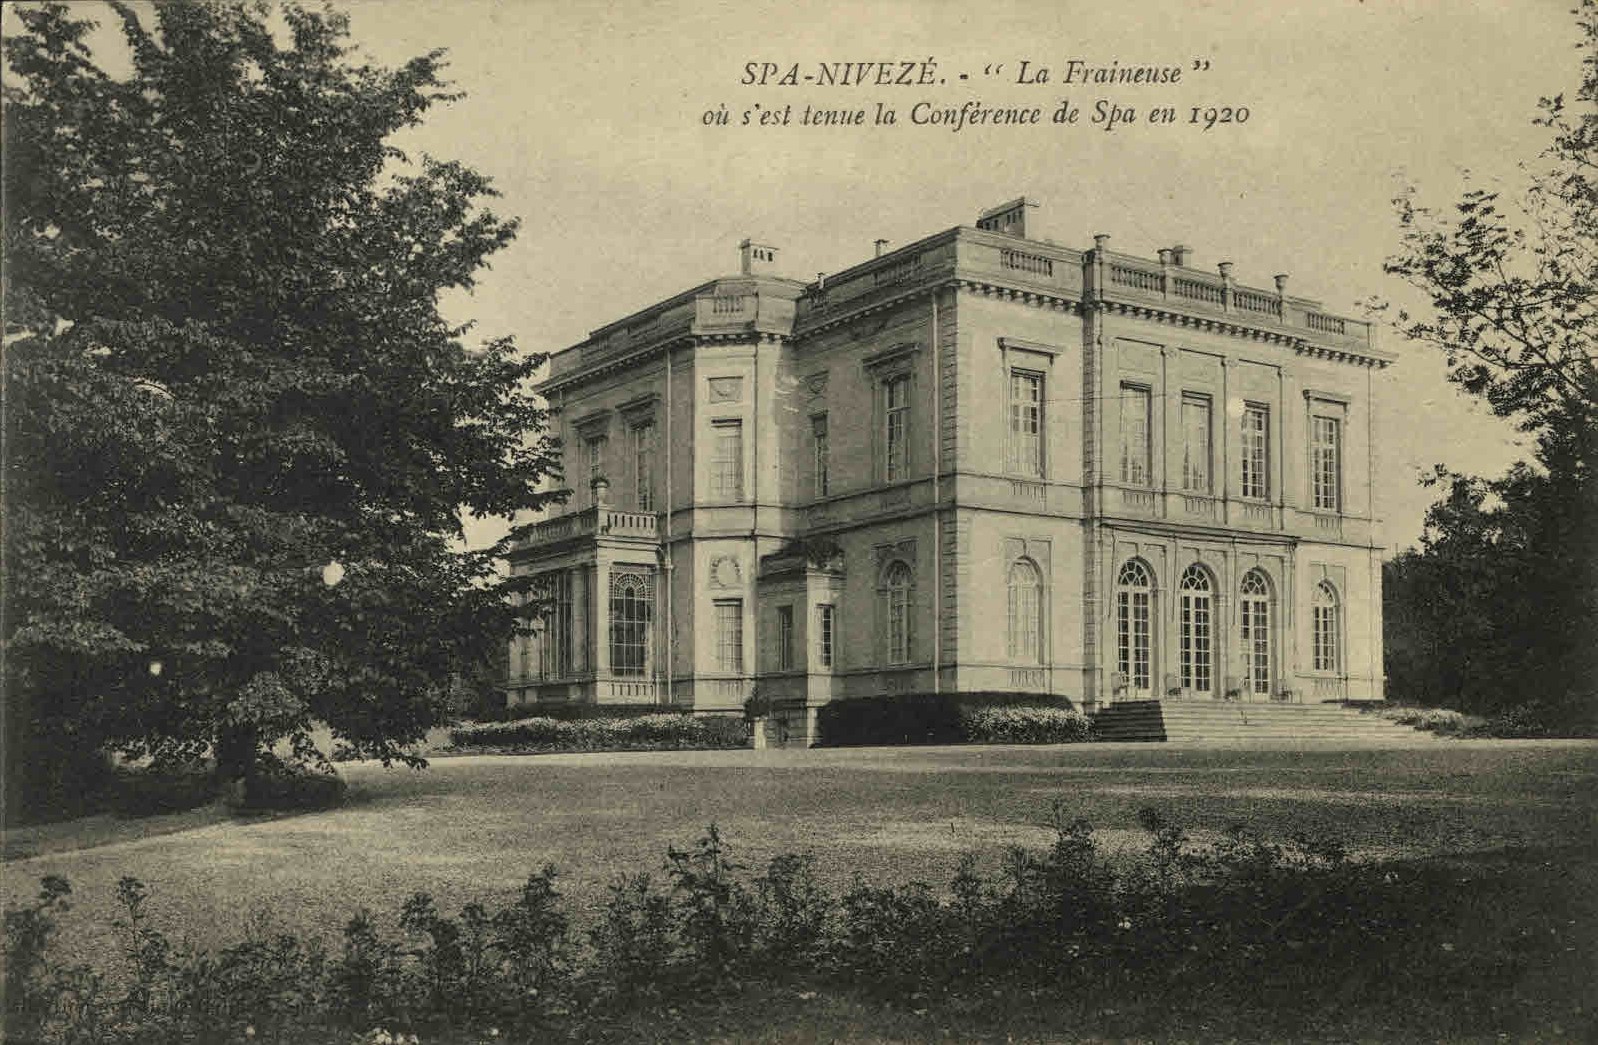 Postcard of La Fraineuse, venue of the Spa conference, 1920